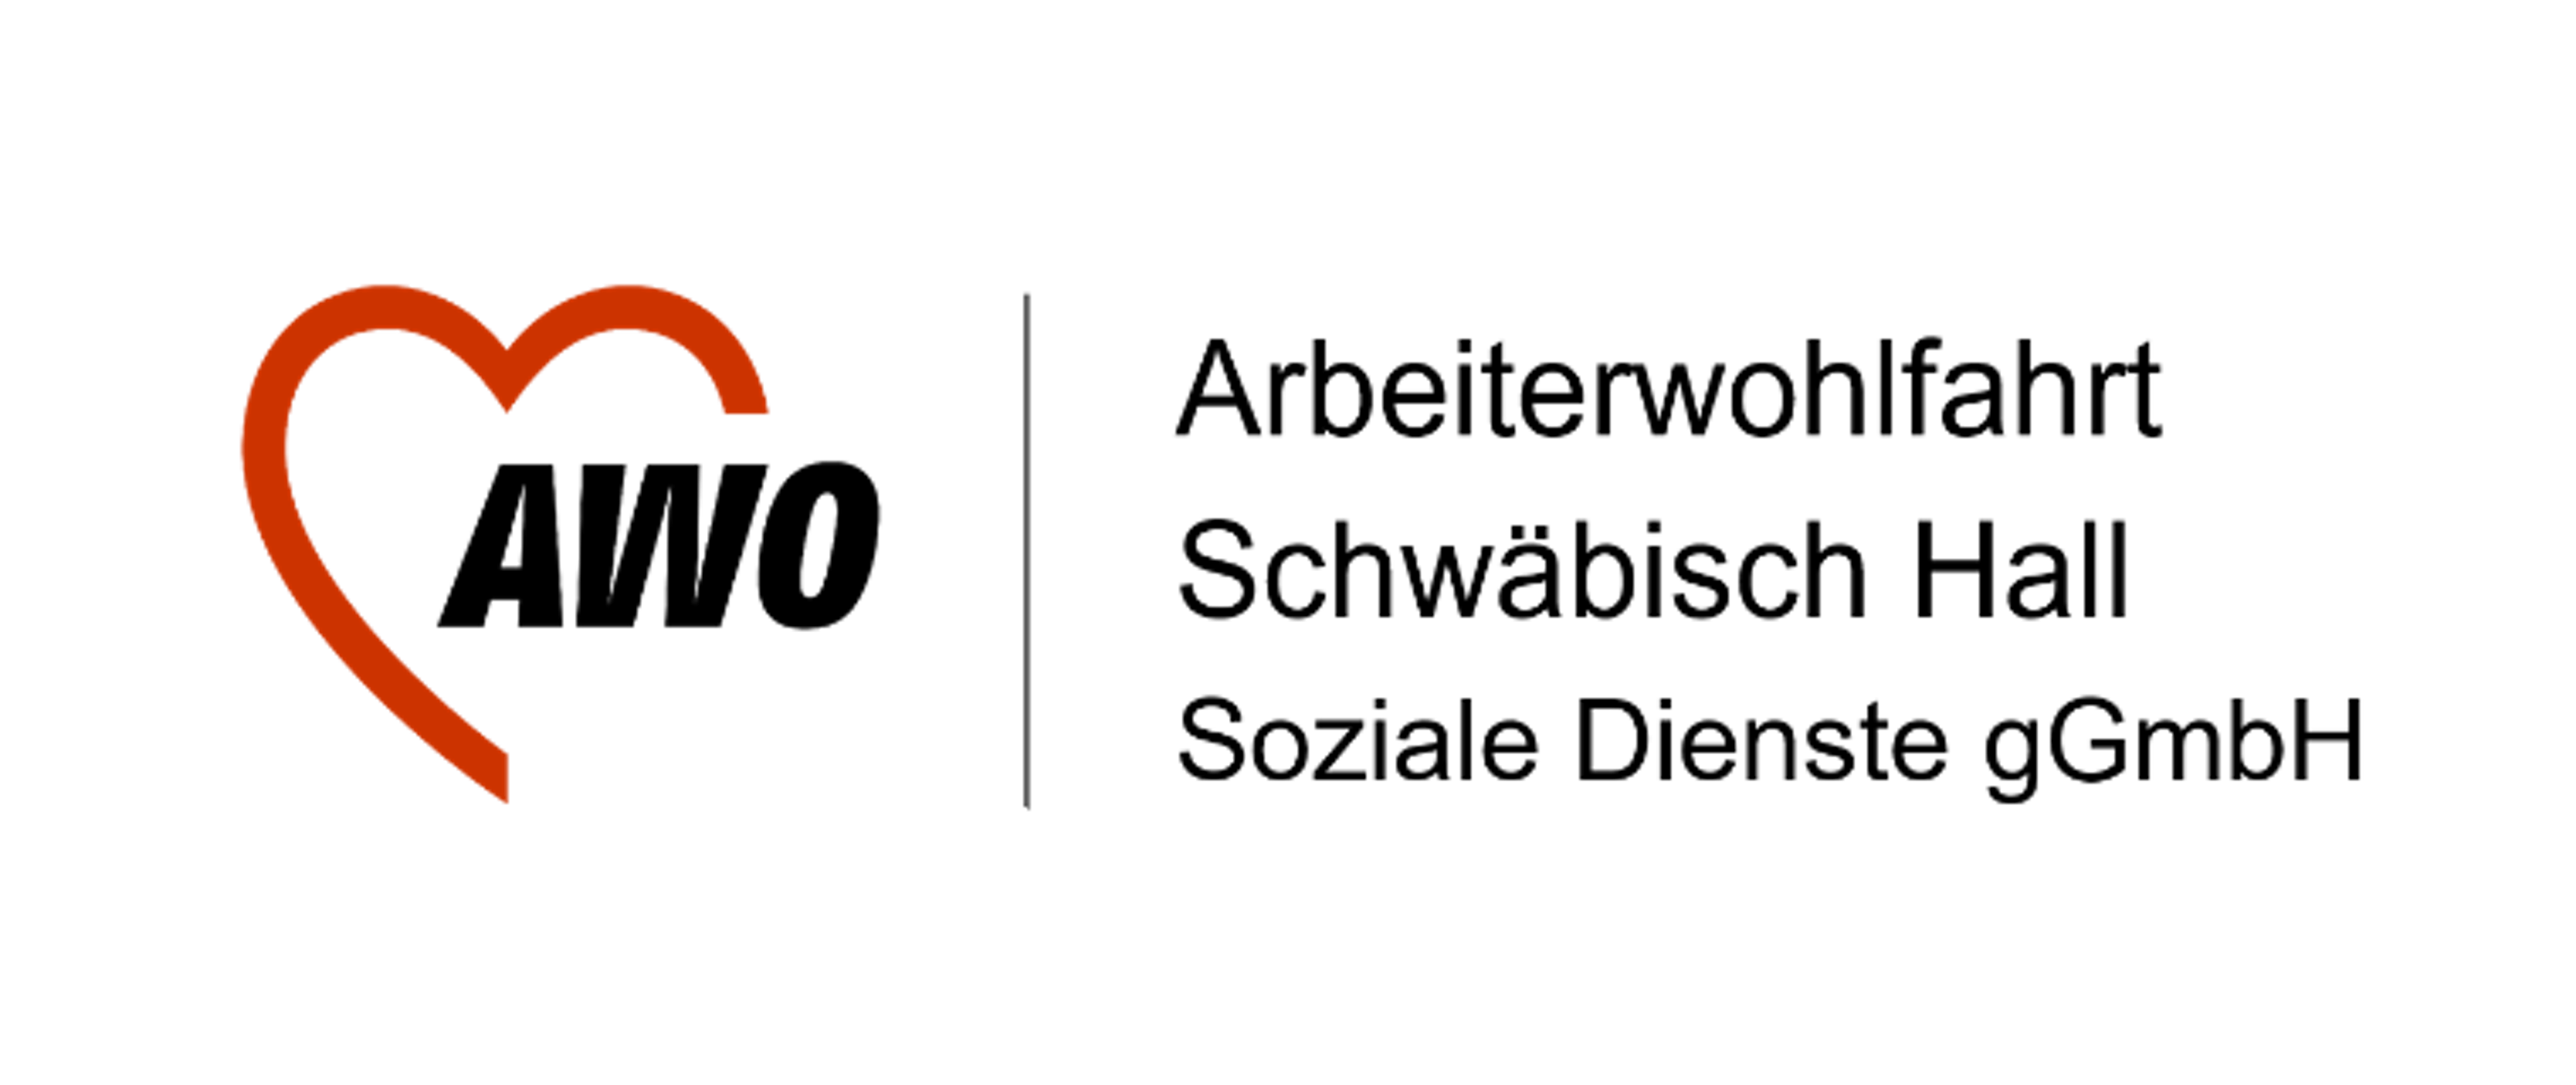 Logo of german welfare association "Arbeiterwohlfahrt"